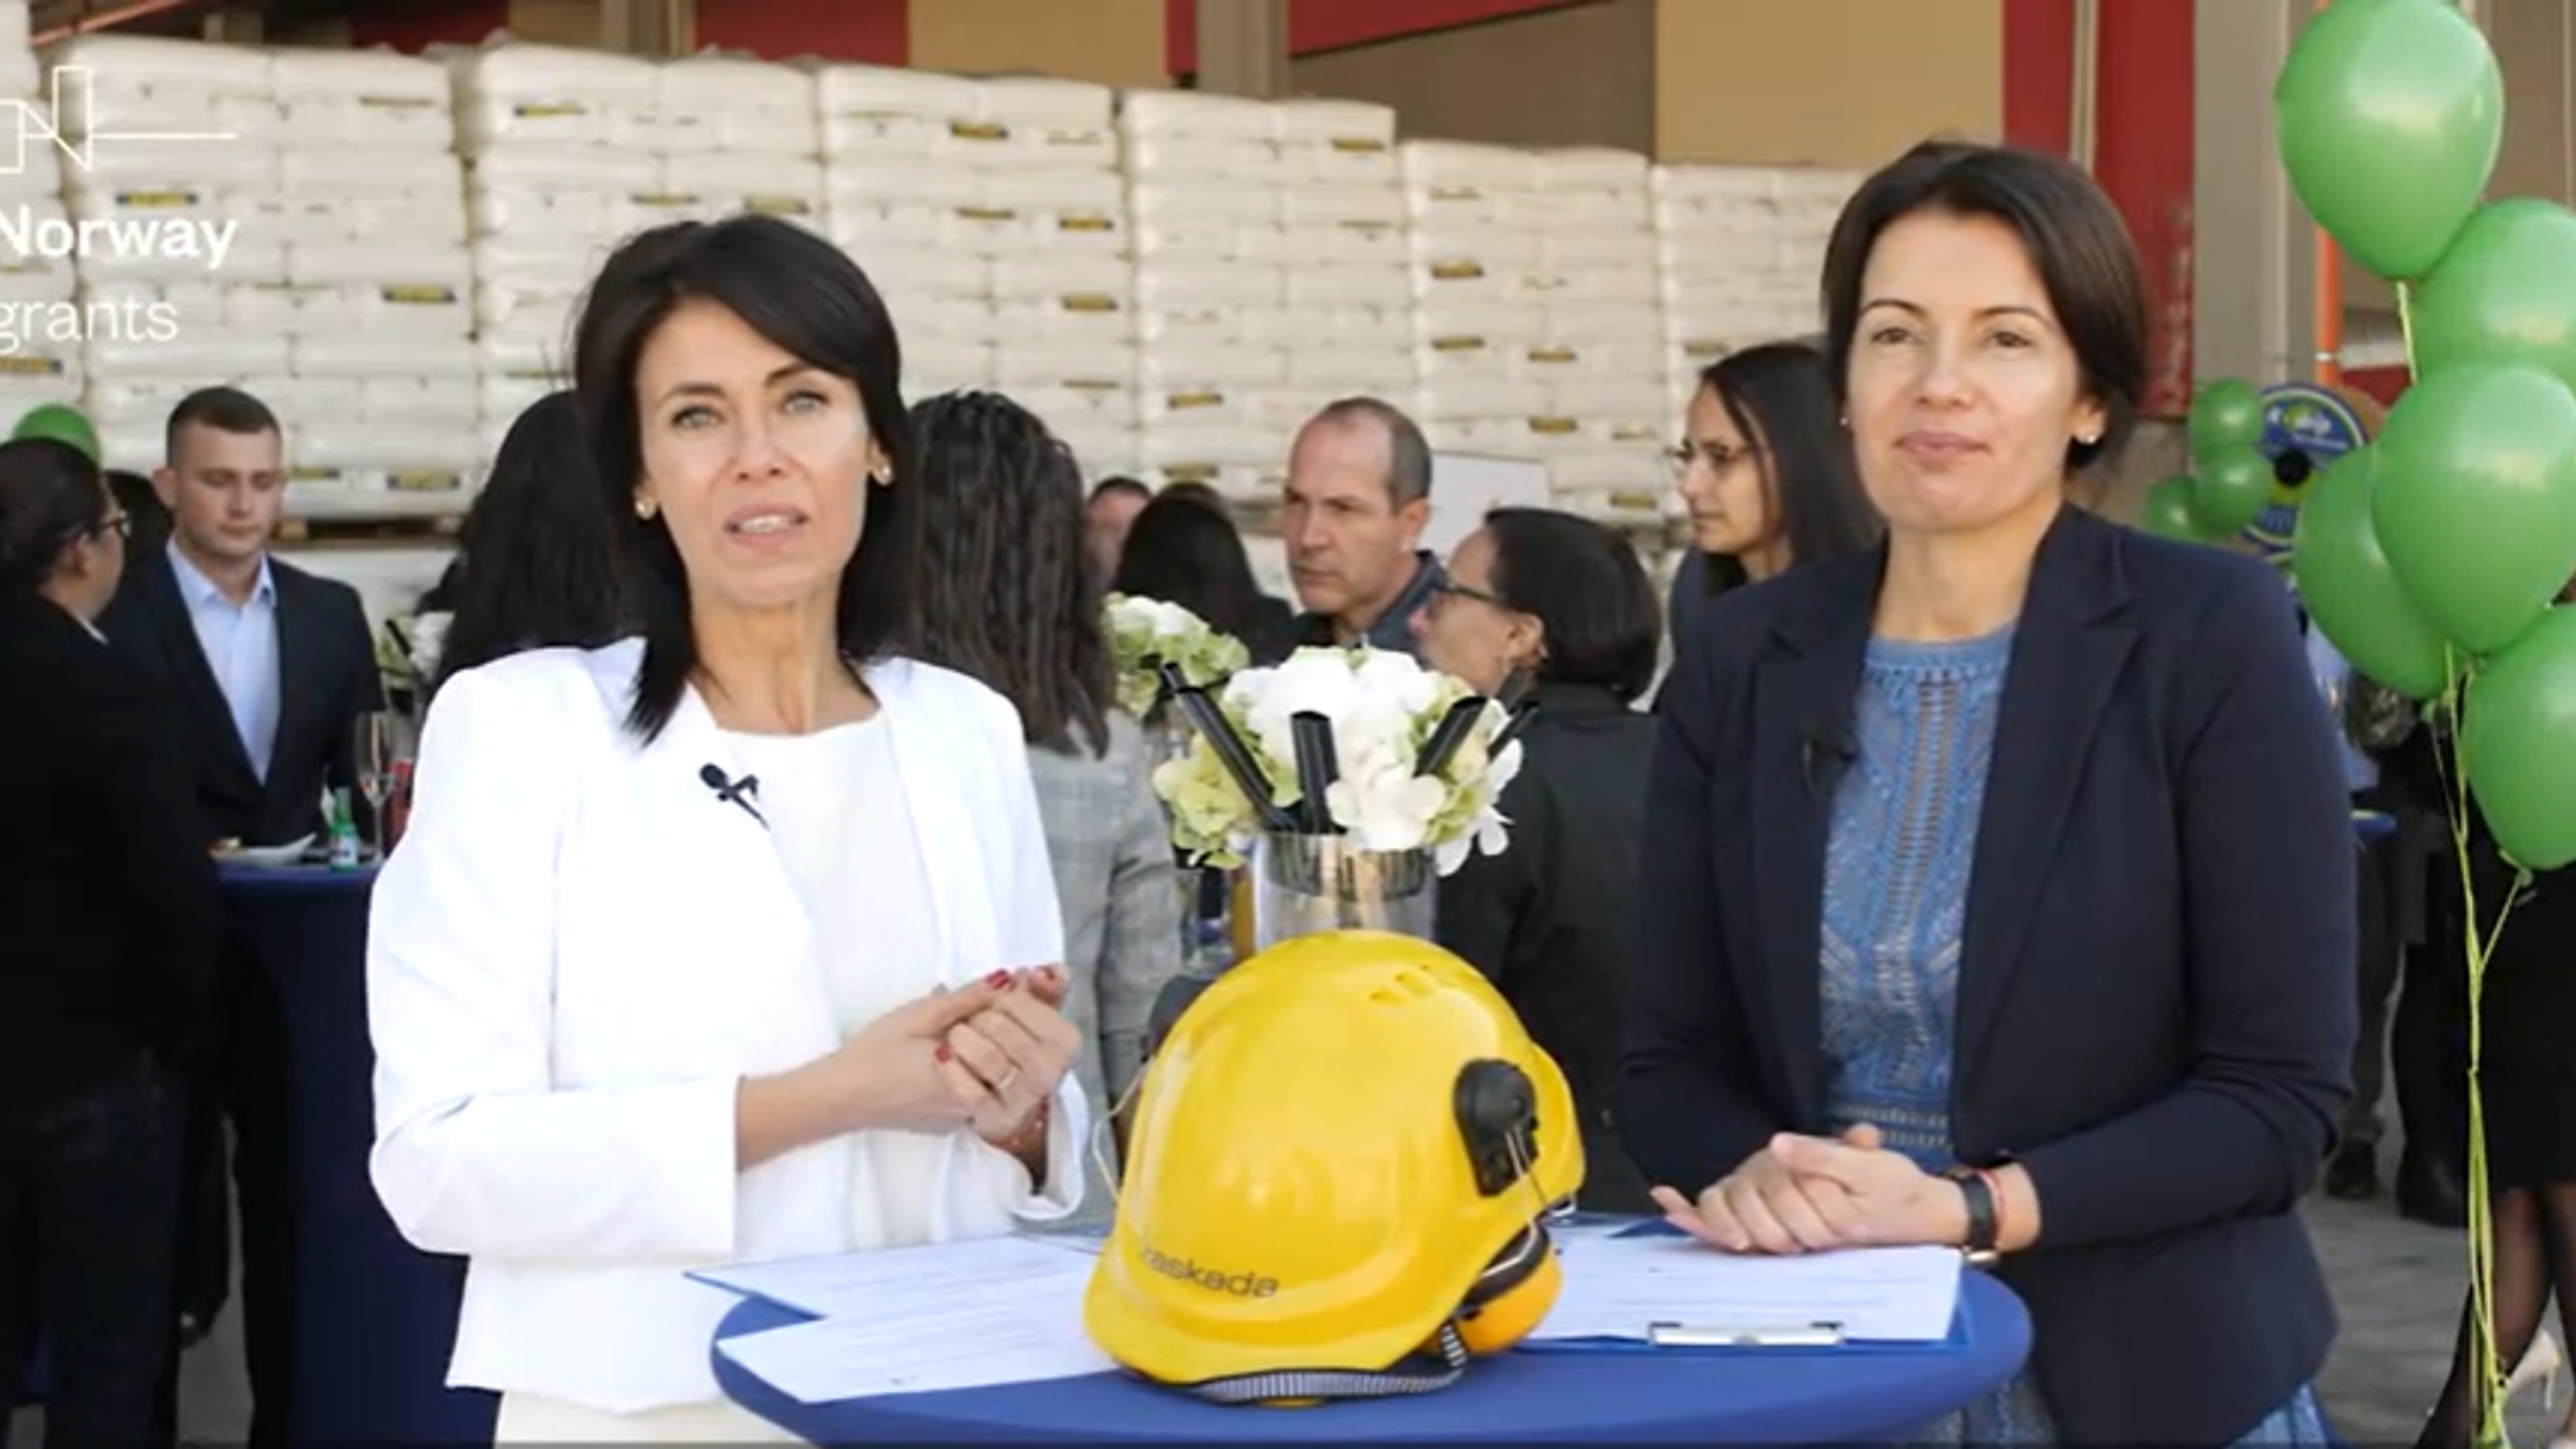 Two business women with industrial helmet